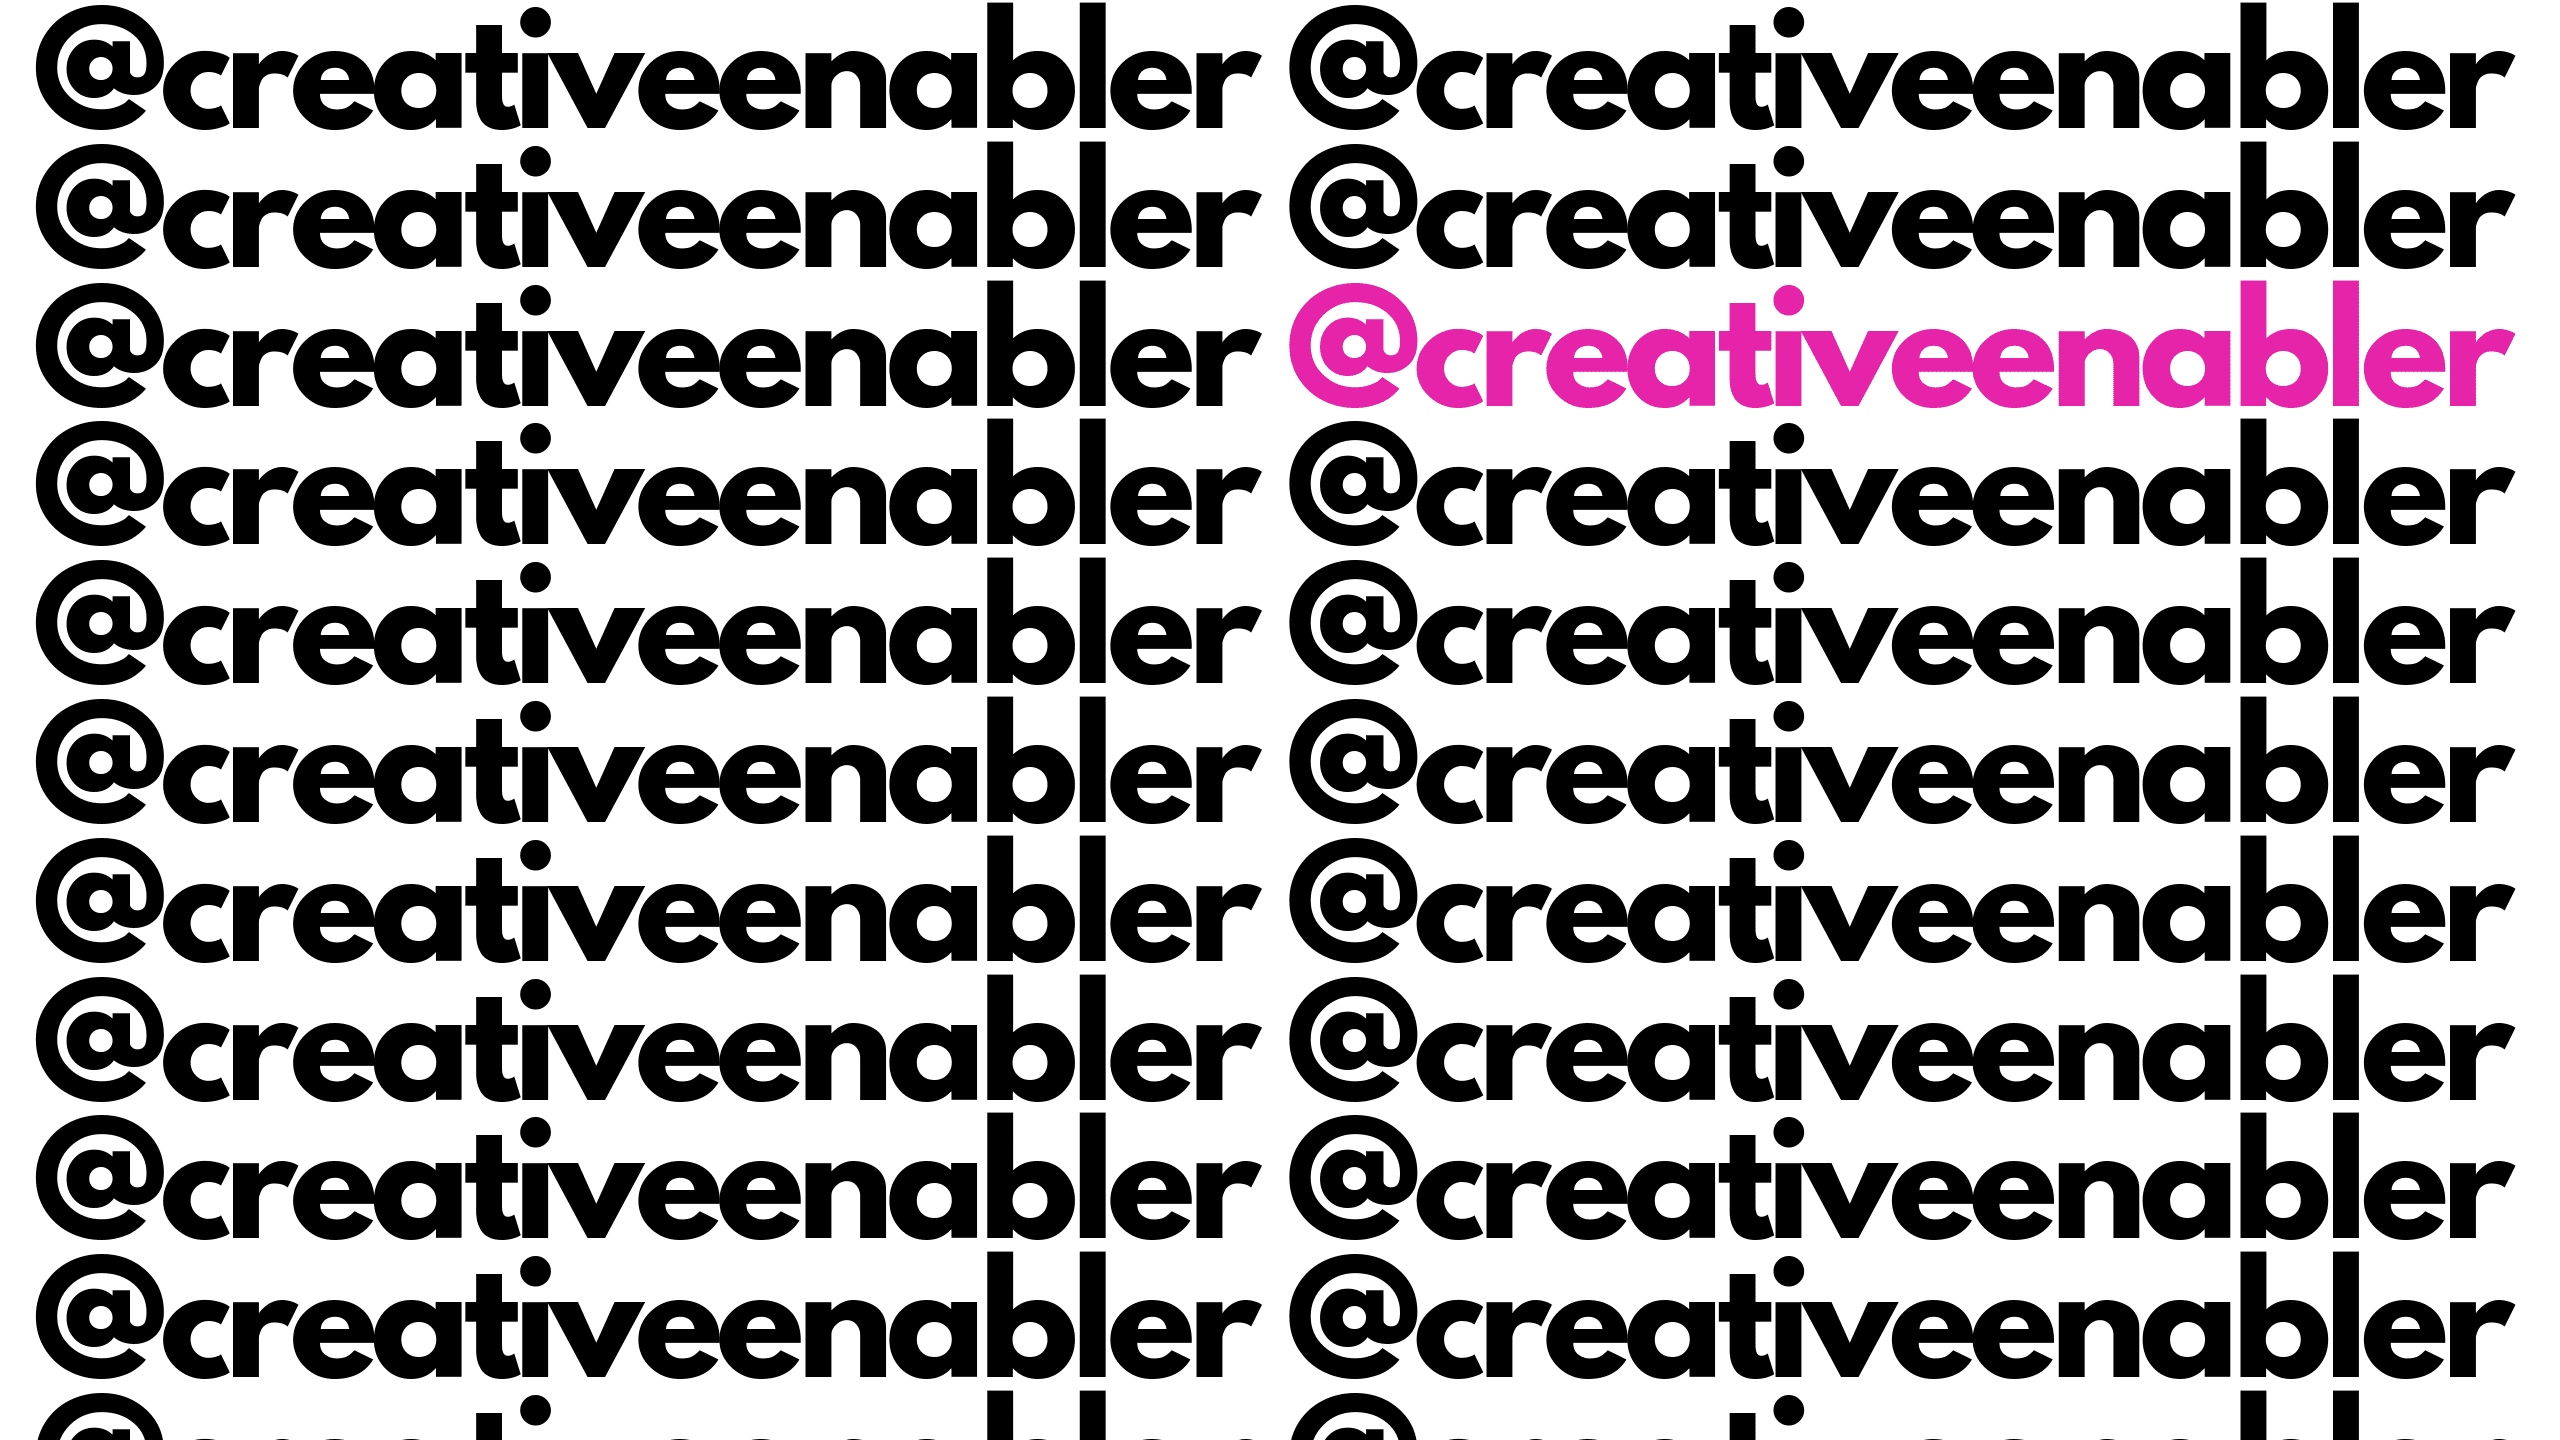 Creative Enabler Official